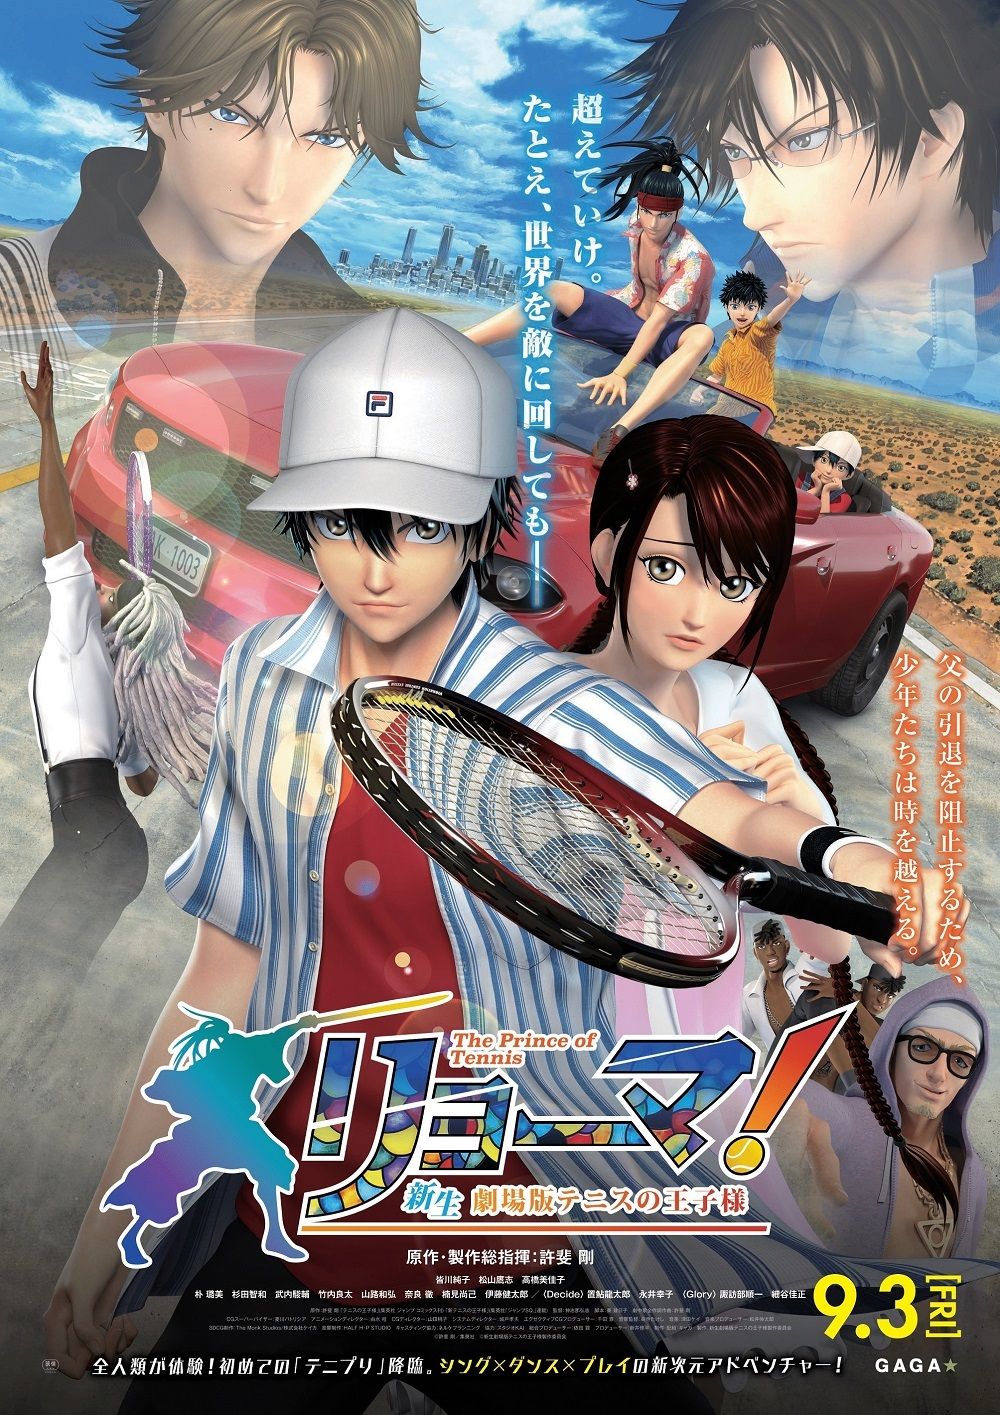 The Prince Of Tennis anime poster